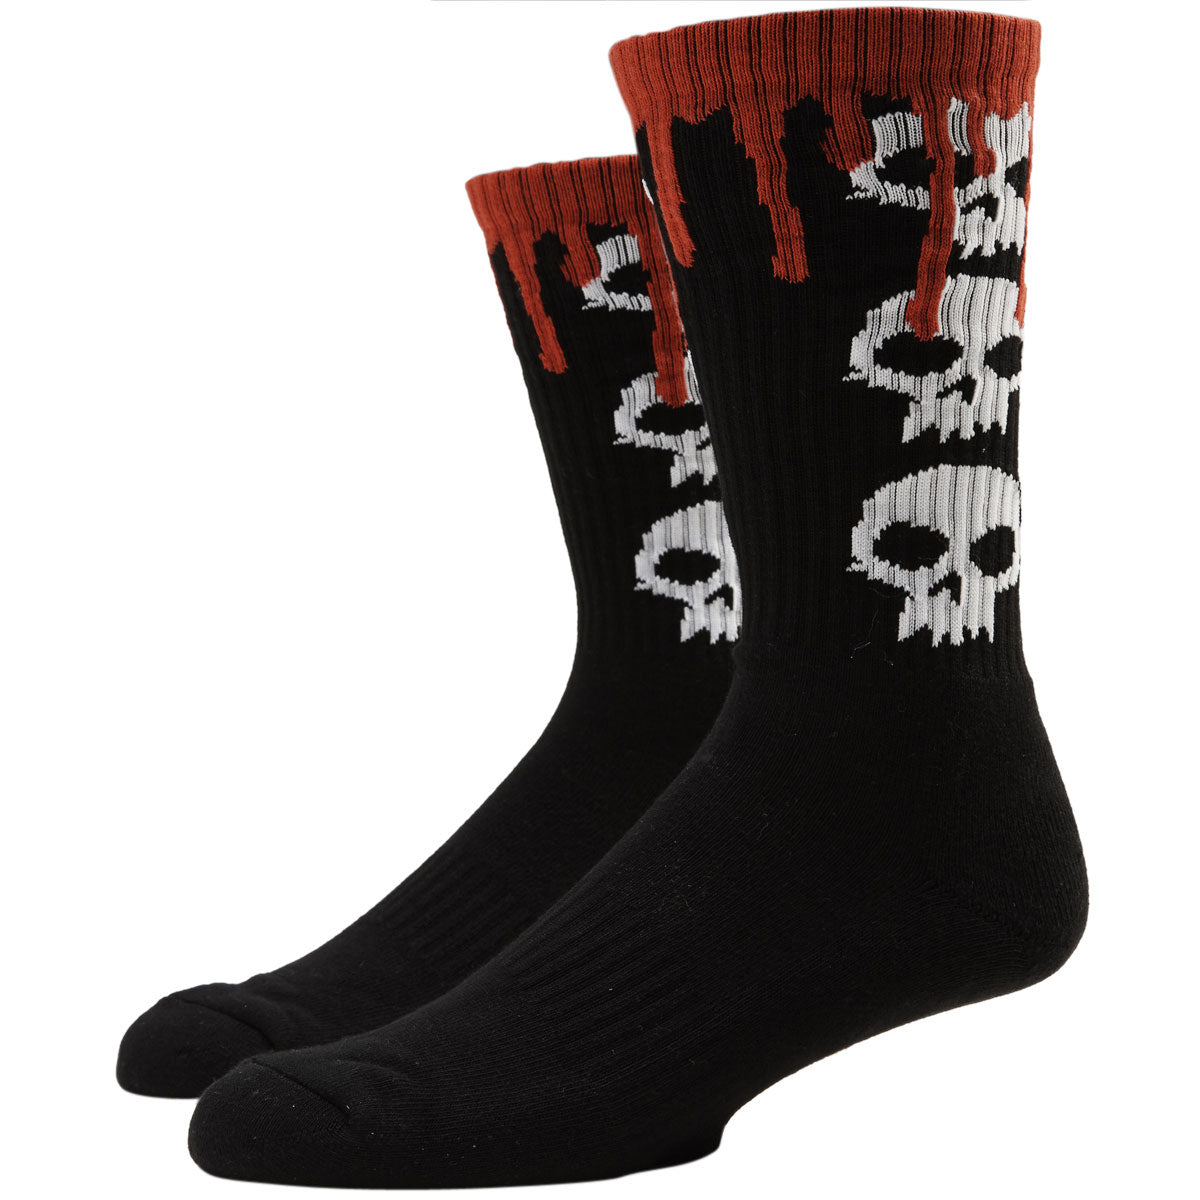 Zero 3 Skull Blood Socks - Black image 1